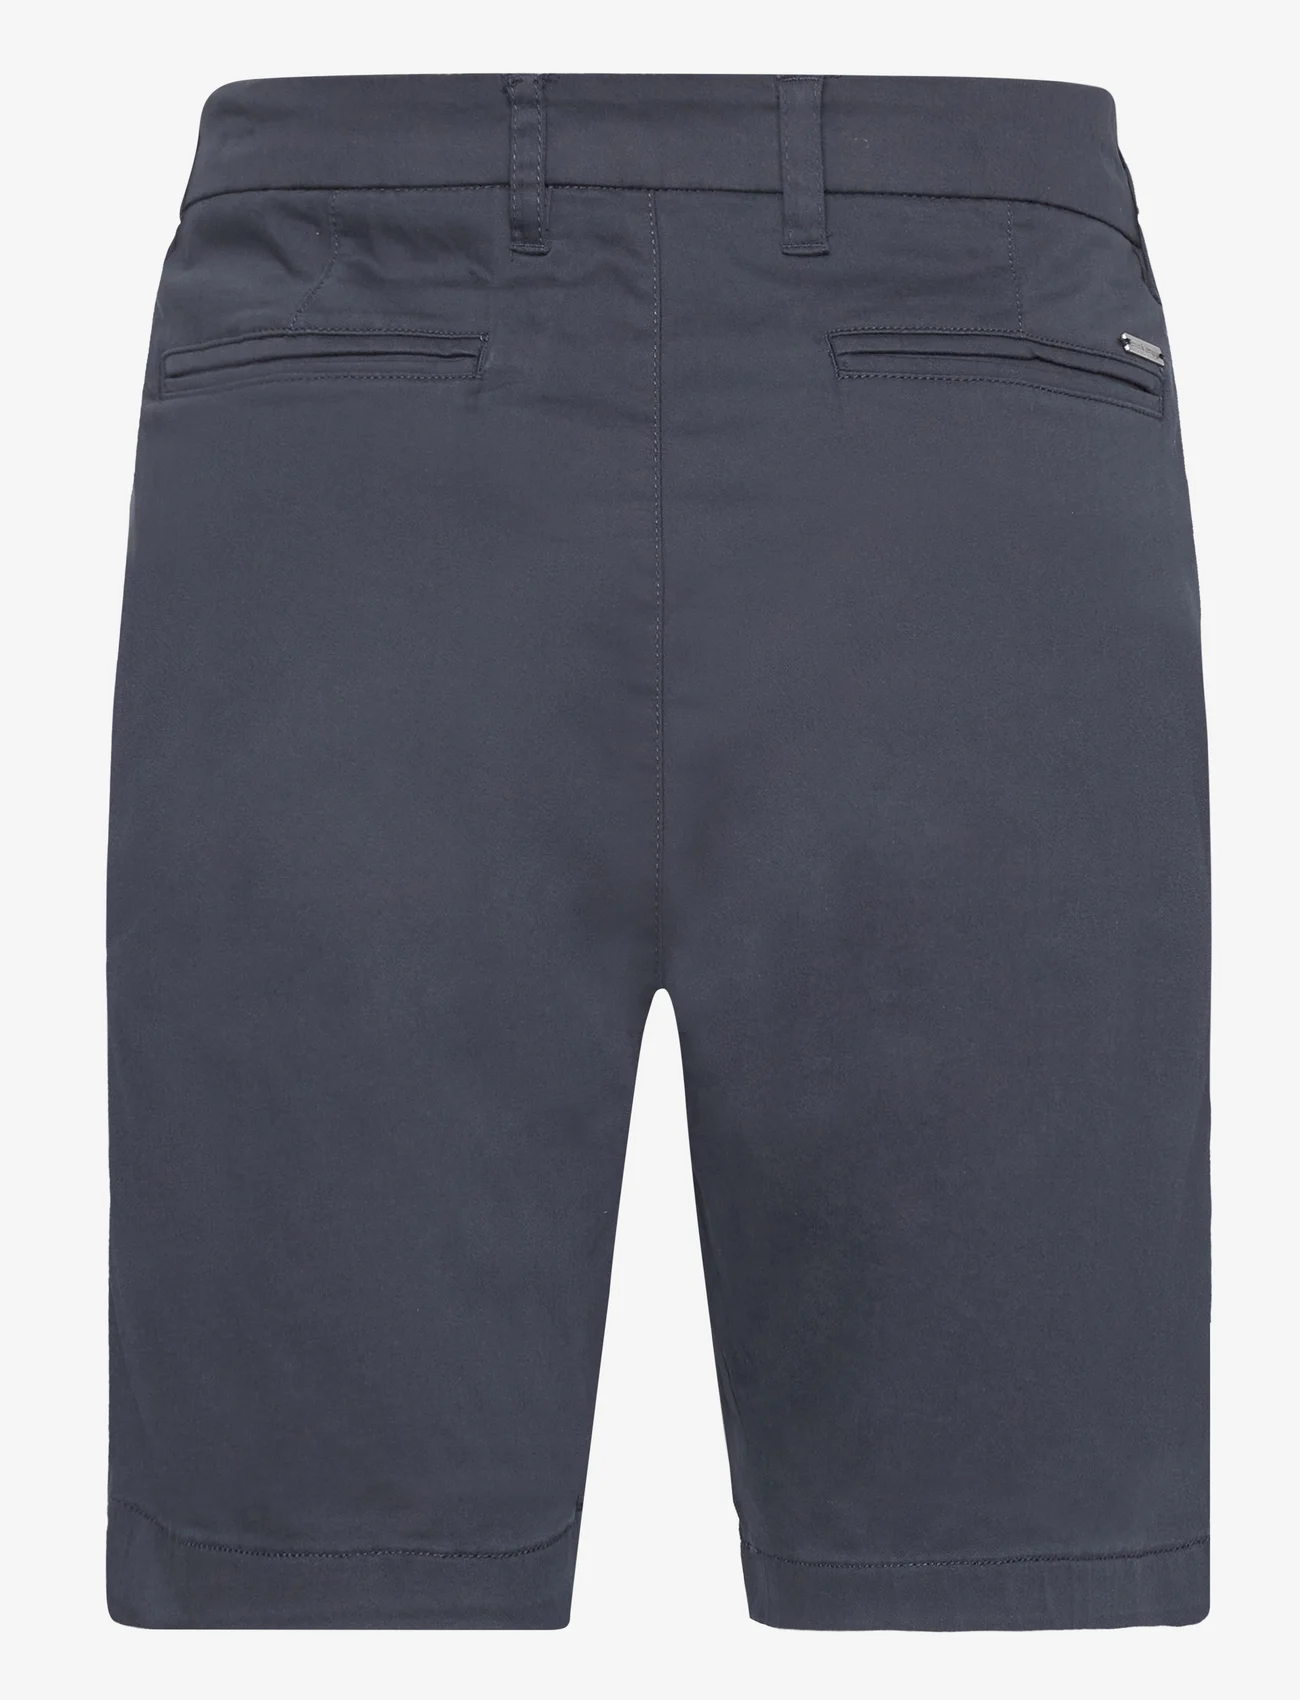 Bruun & Stengade - BS Cho Regular Fit Shorts - chinos shorts - navy - 1